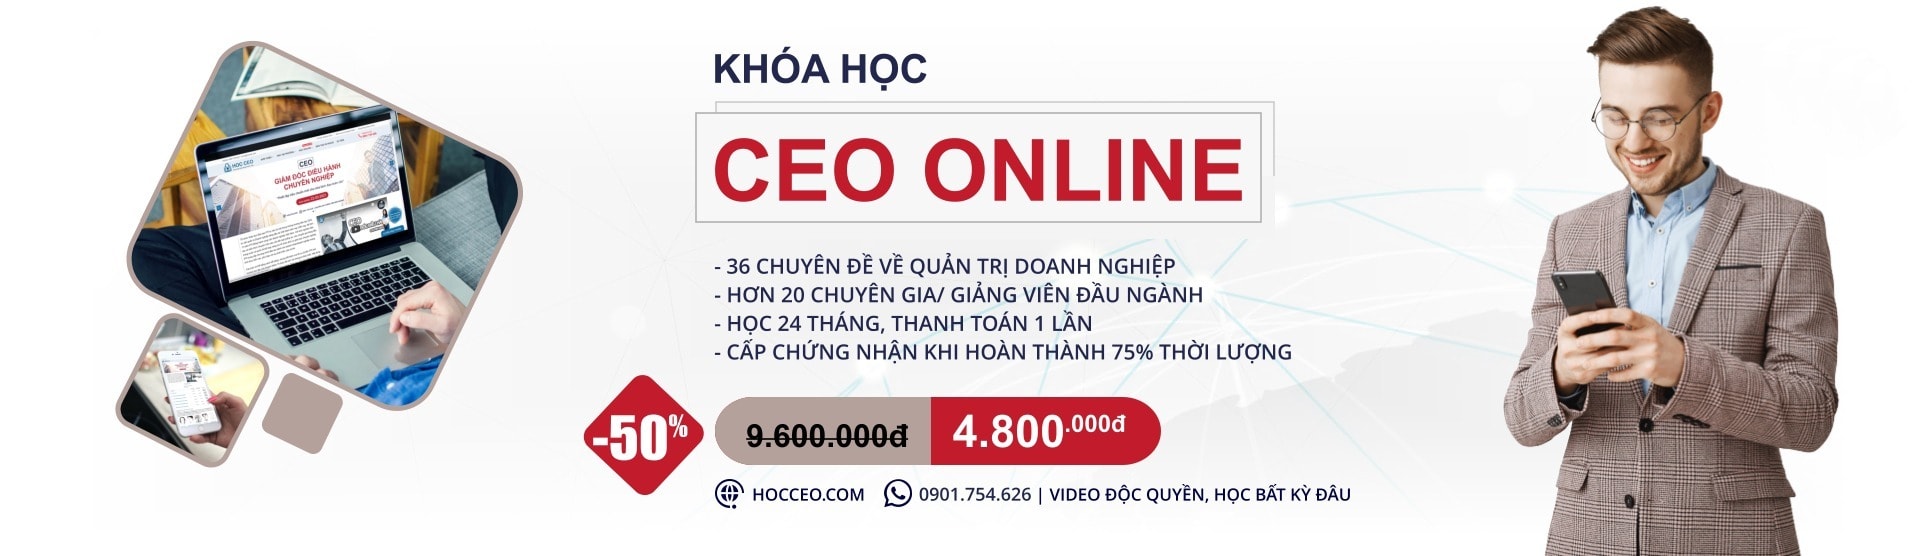 Khóa học CEO online